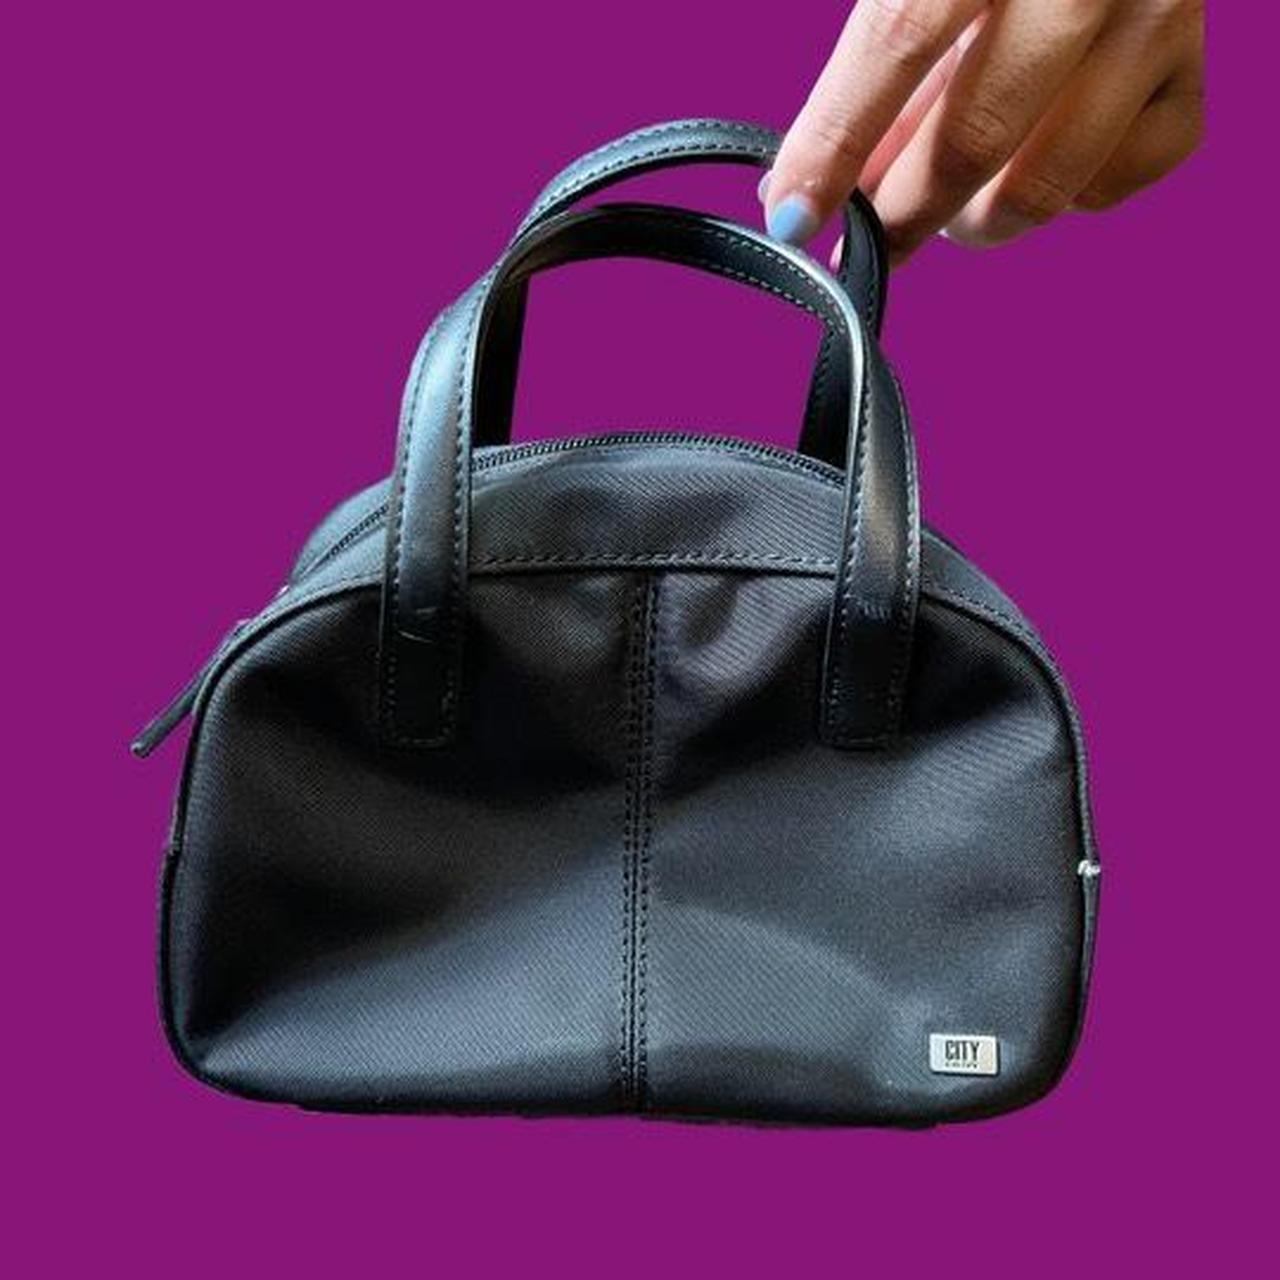 Product Image 1 - vintage dkny small bag 🌟

-